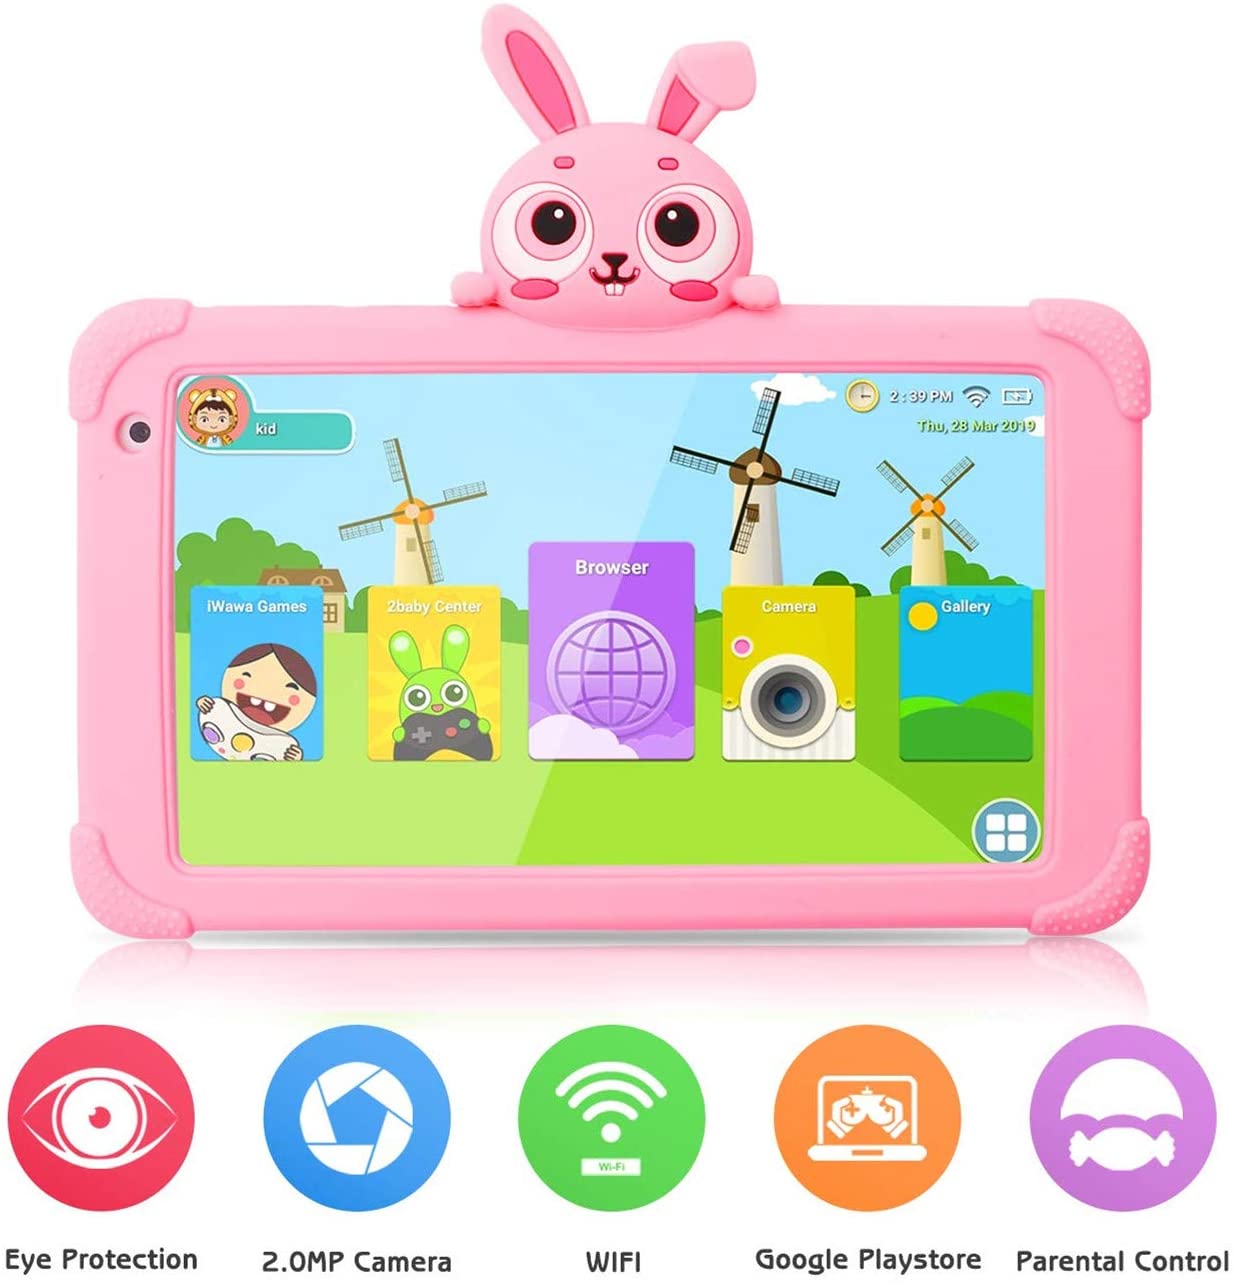 Tablette 7 Pouces Qimaoo Tablette Android 9.0 Tablette Enfants 1Go RAM 16Go  ROM Double caméra iWaWa & Google Play Pré-Installé Table